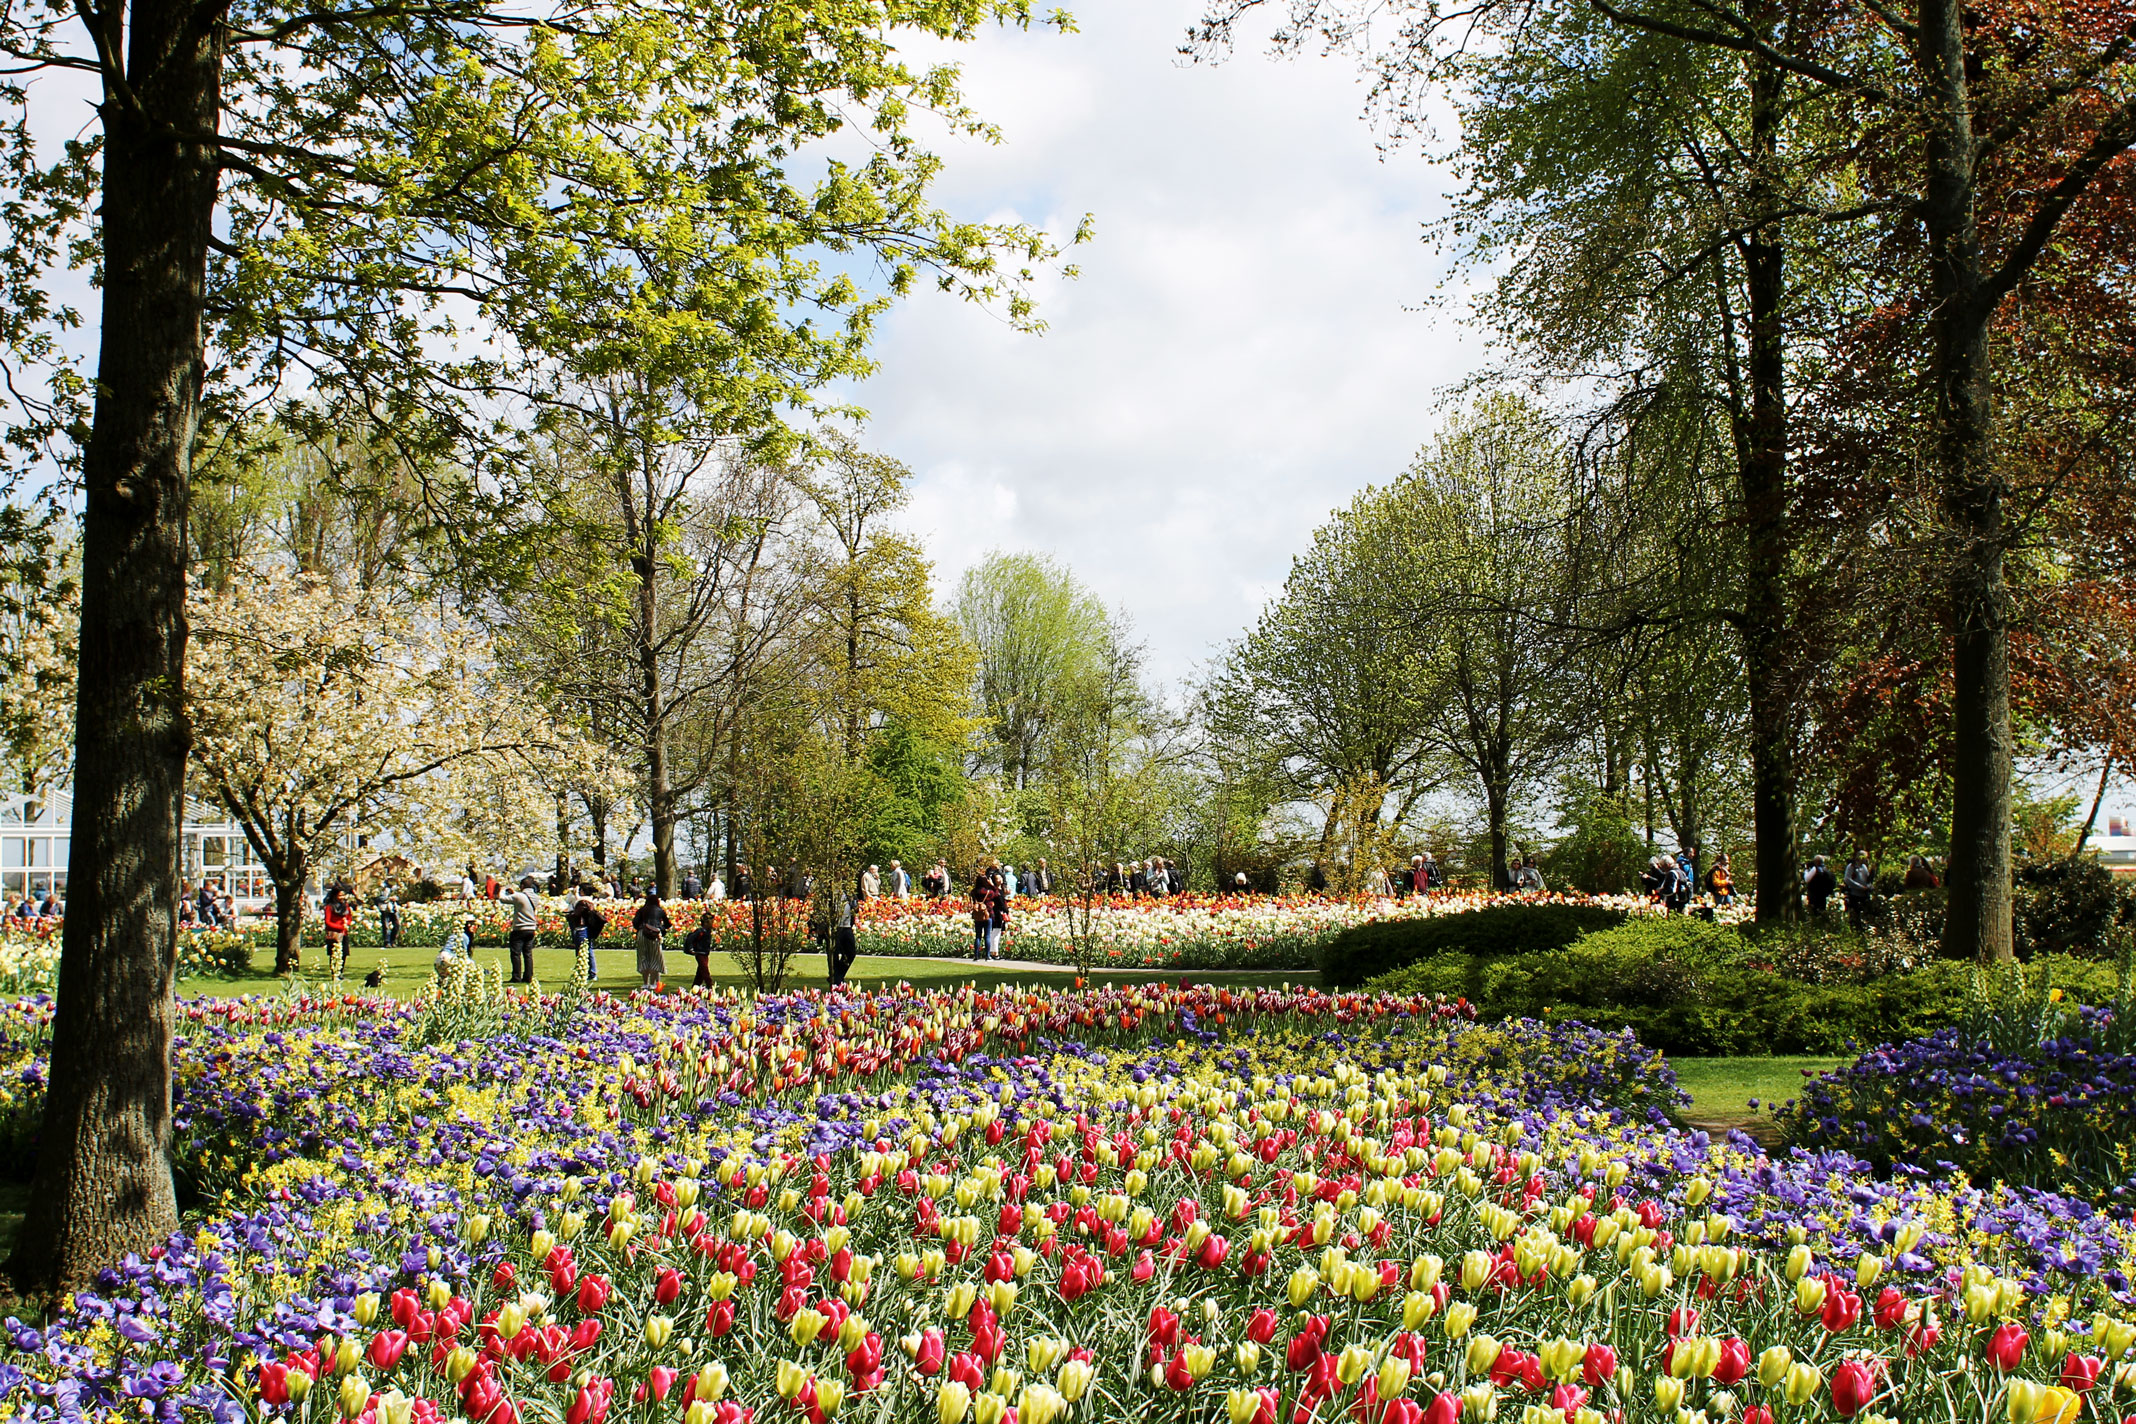 STYLEAT30 Travel + Fashion Blog - Keukenhof Gardens and Tulip Fields Tour from Amsterdam - Holland Tulips - 17